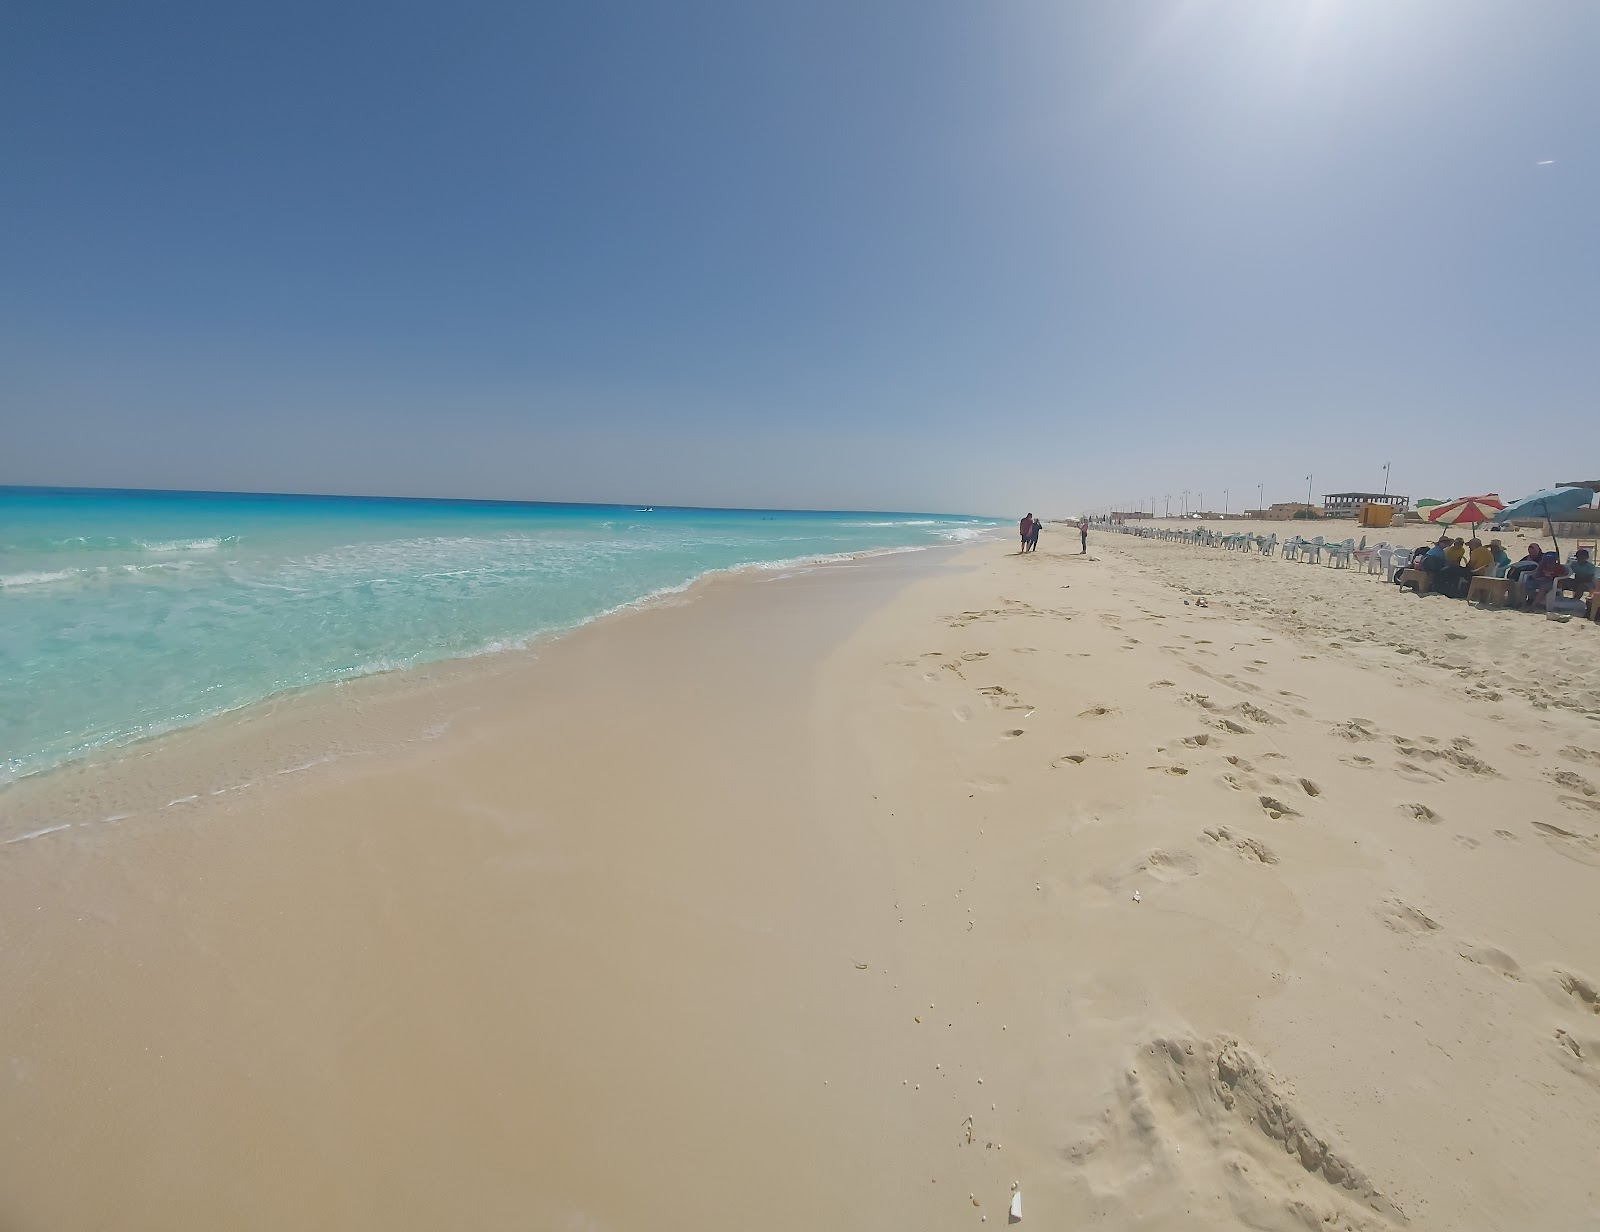 Fotografija Nosour Al Abyad Beach z prostorna obala